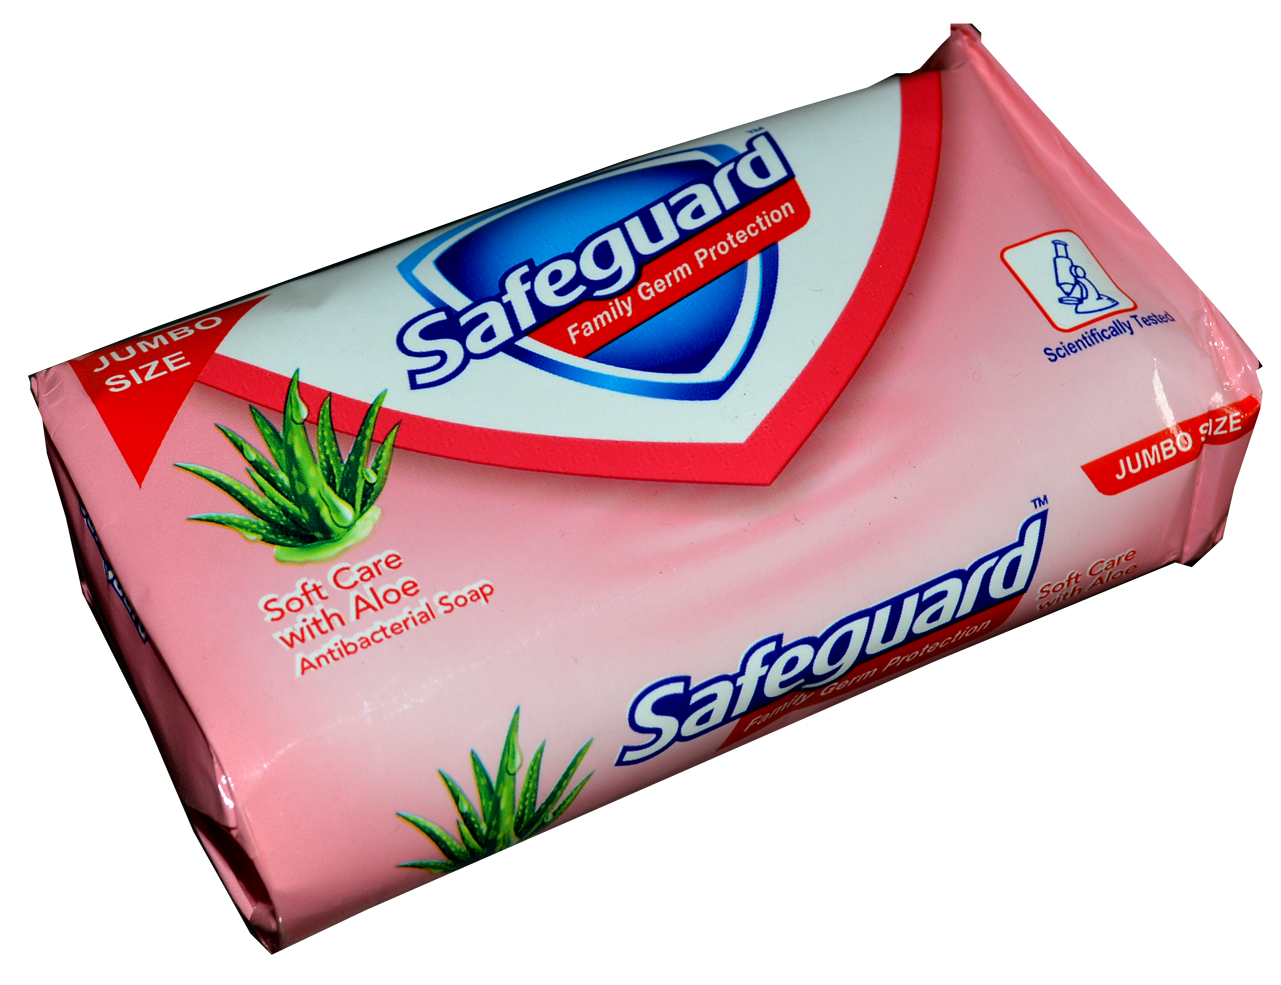 Safeguard Soap Pink 160g